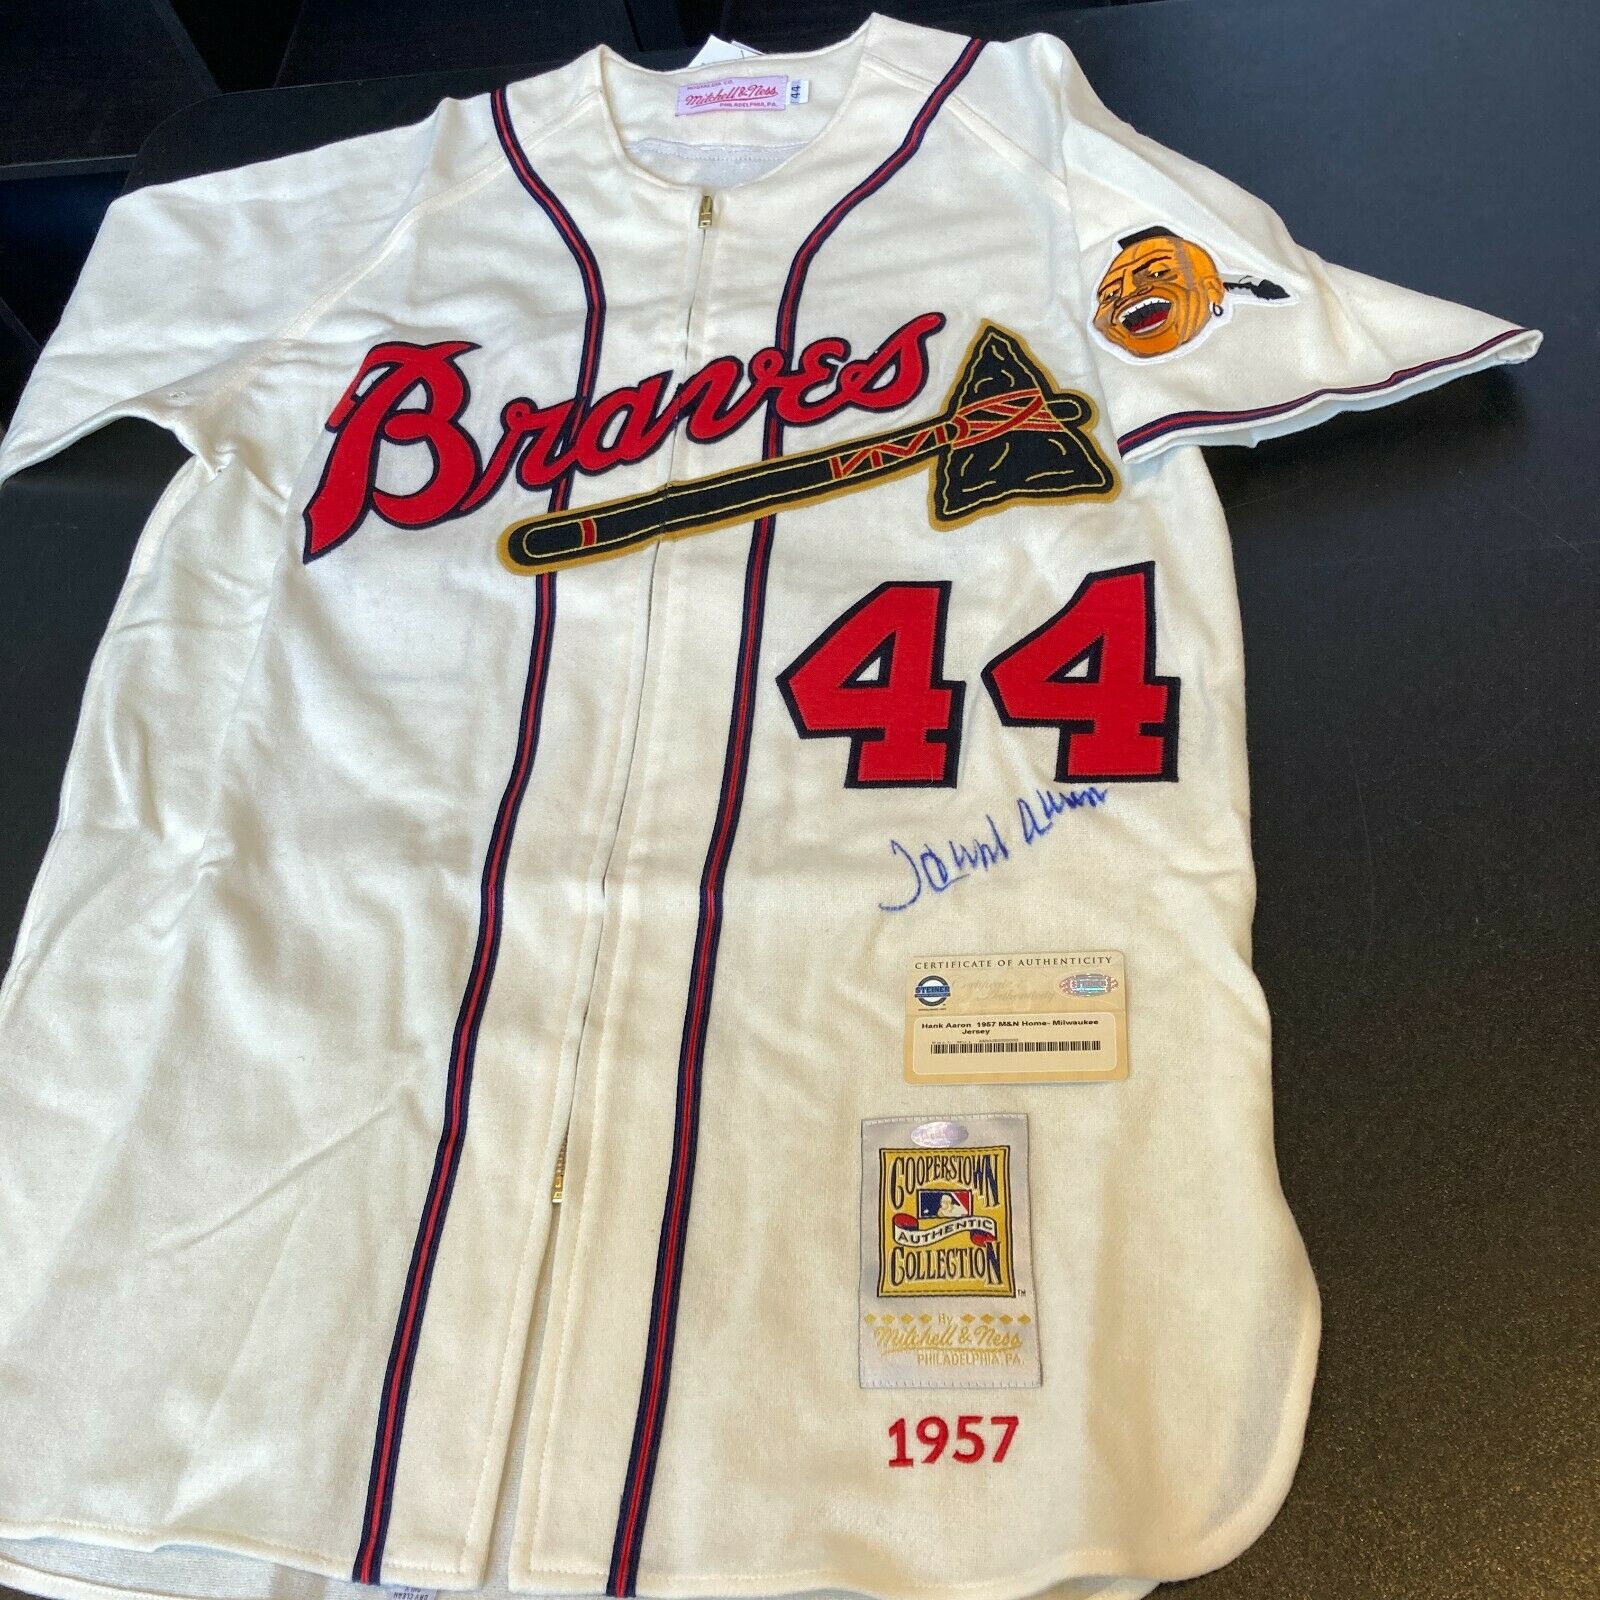 Hank Aaron Men's Atlanta Braves Home Jersey - White Authentic